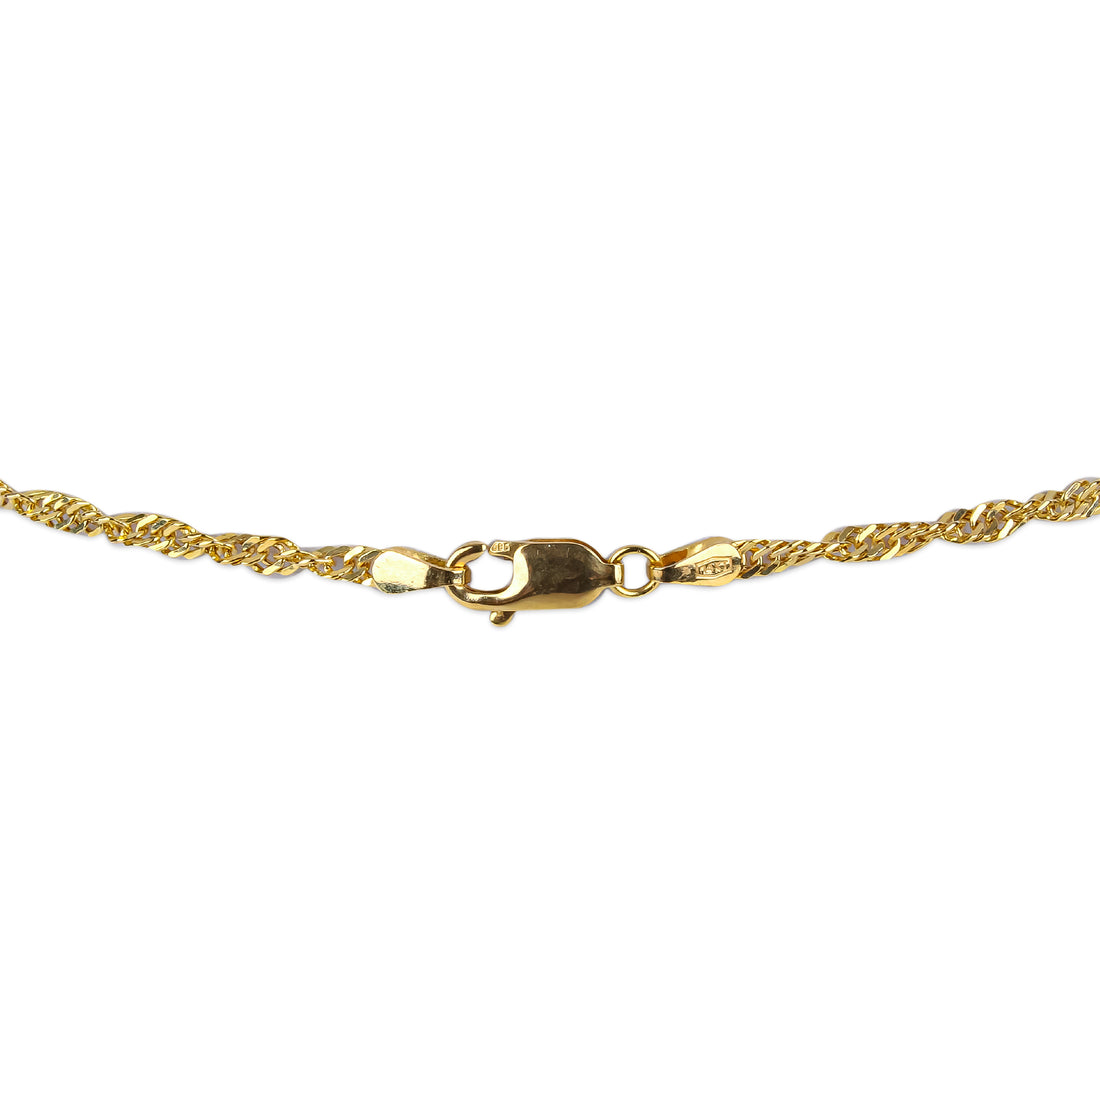 14K Yellow Gold Amethyst Cross Pendant Necklace